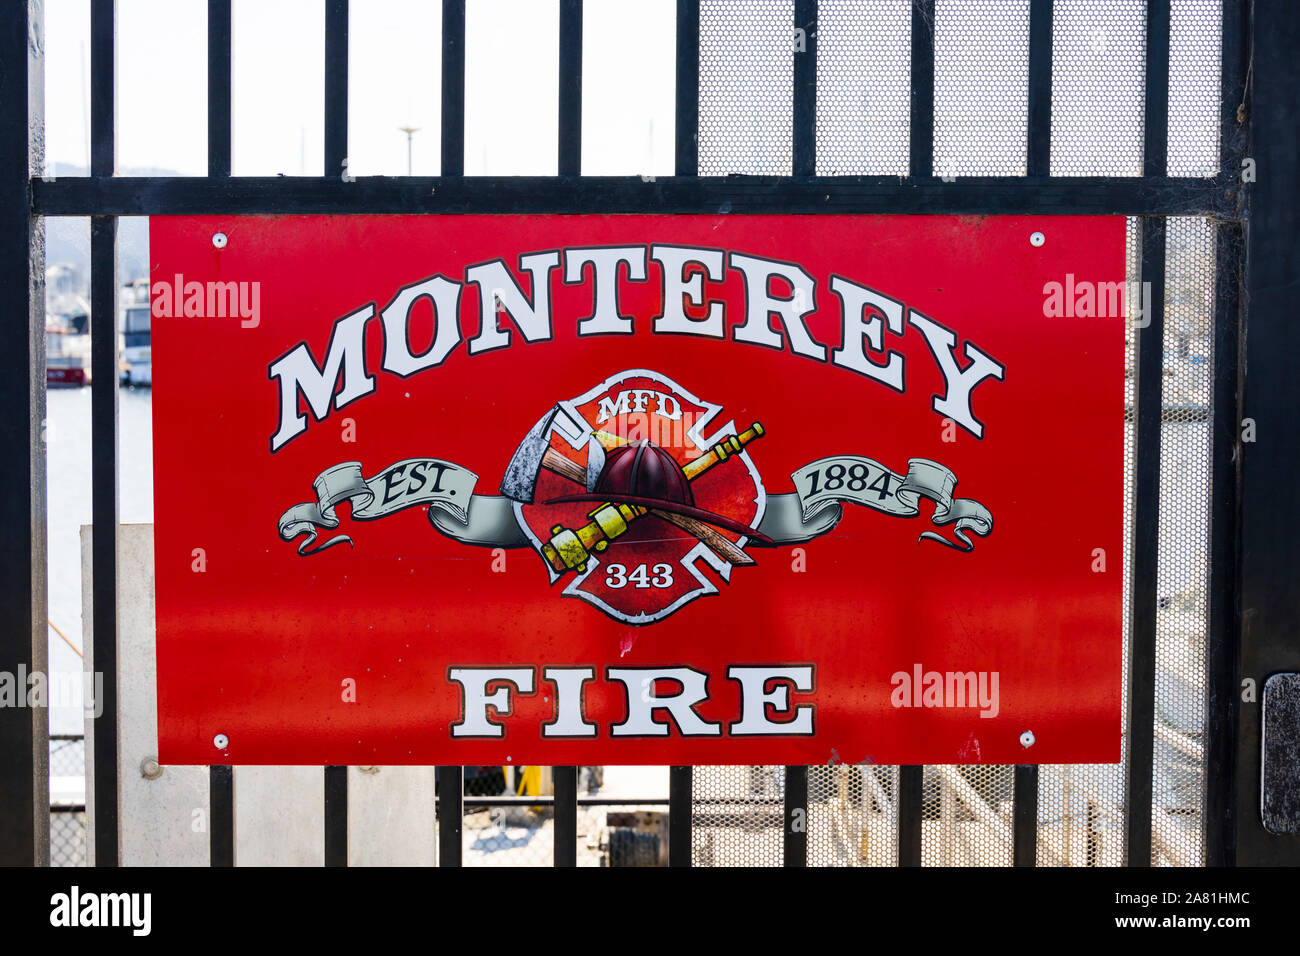 Monterey Fire Dept sign, Coast Guards pier, Fishermans Wharf, Monterey, California, United States of America. Stock Photo